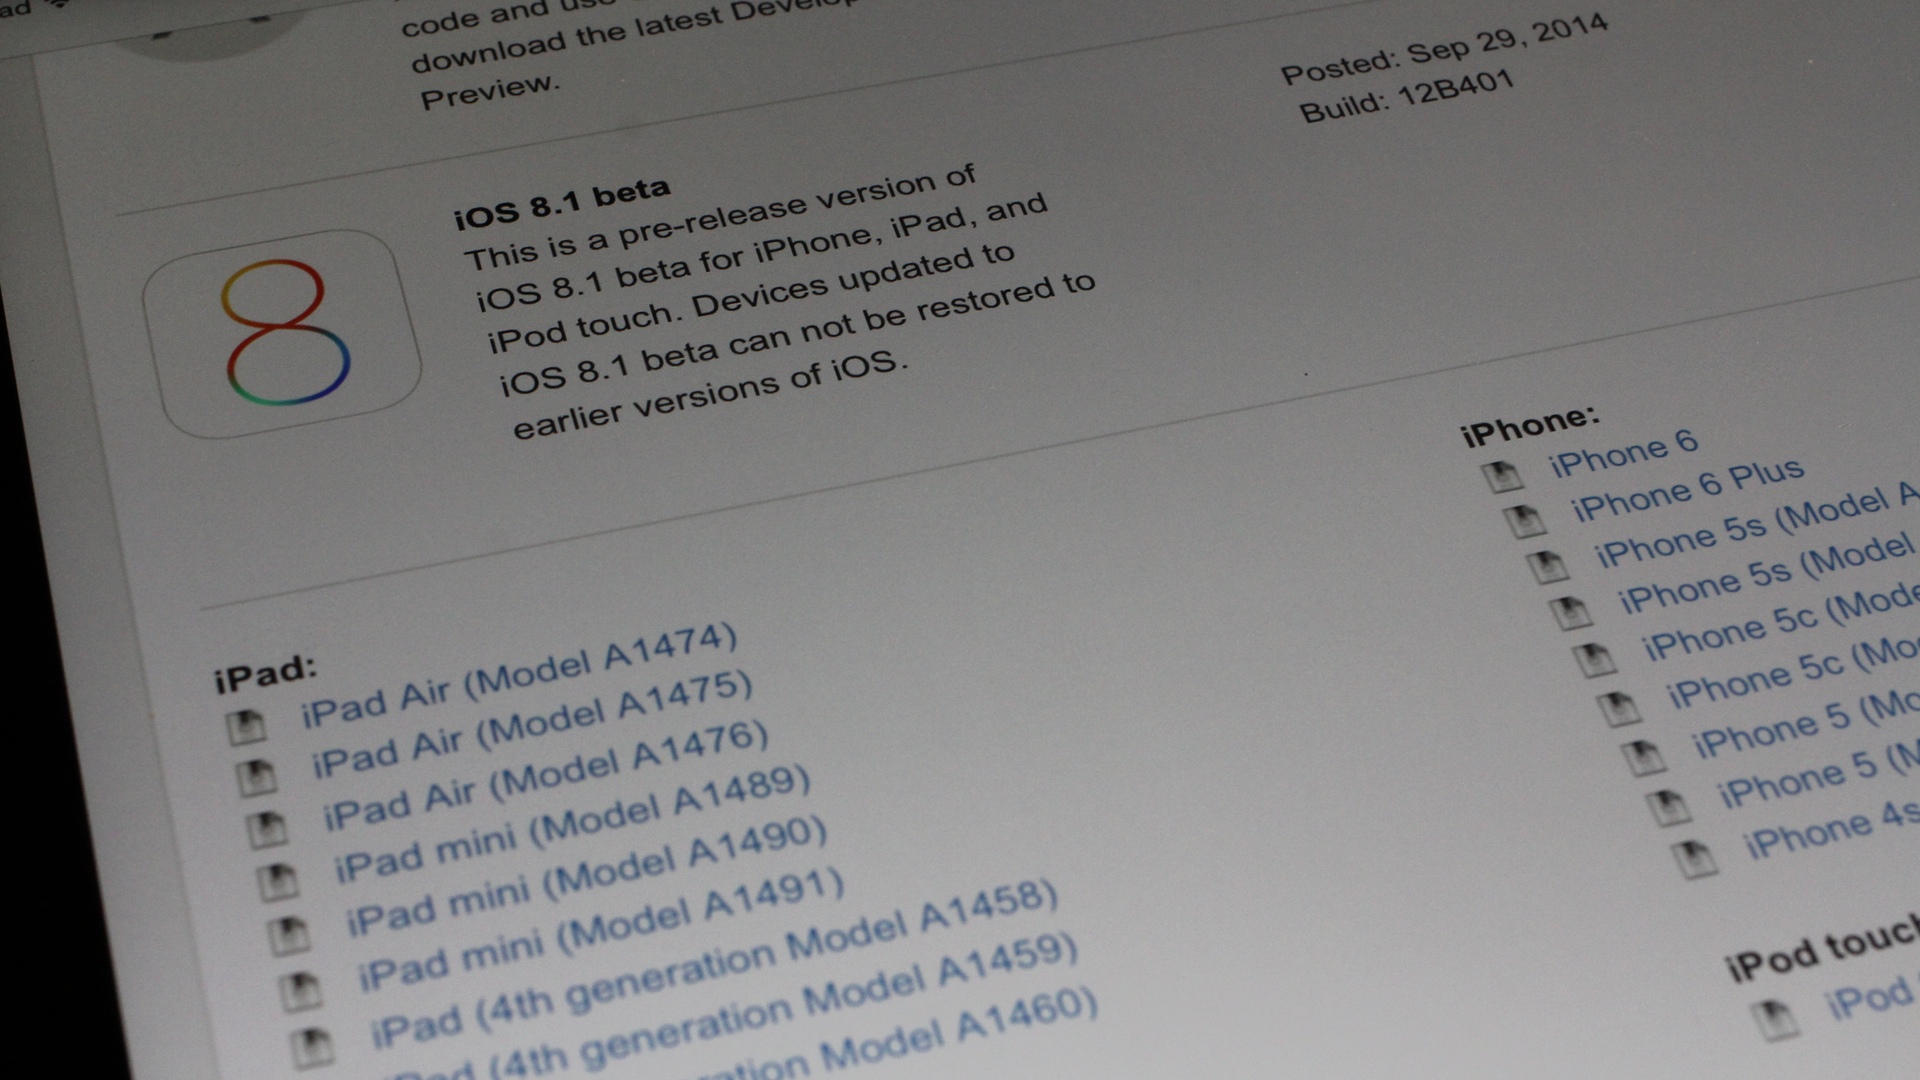 iOS 8.1 beta